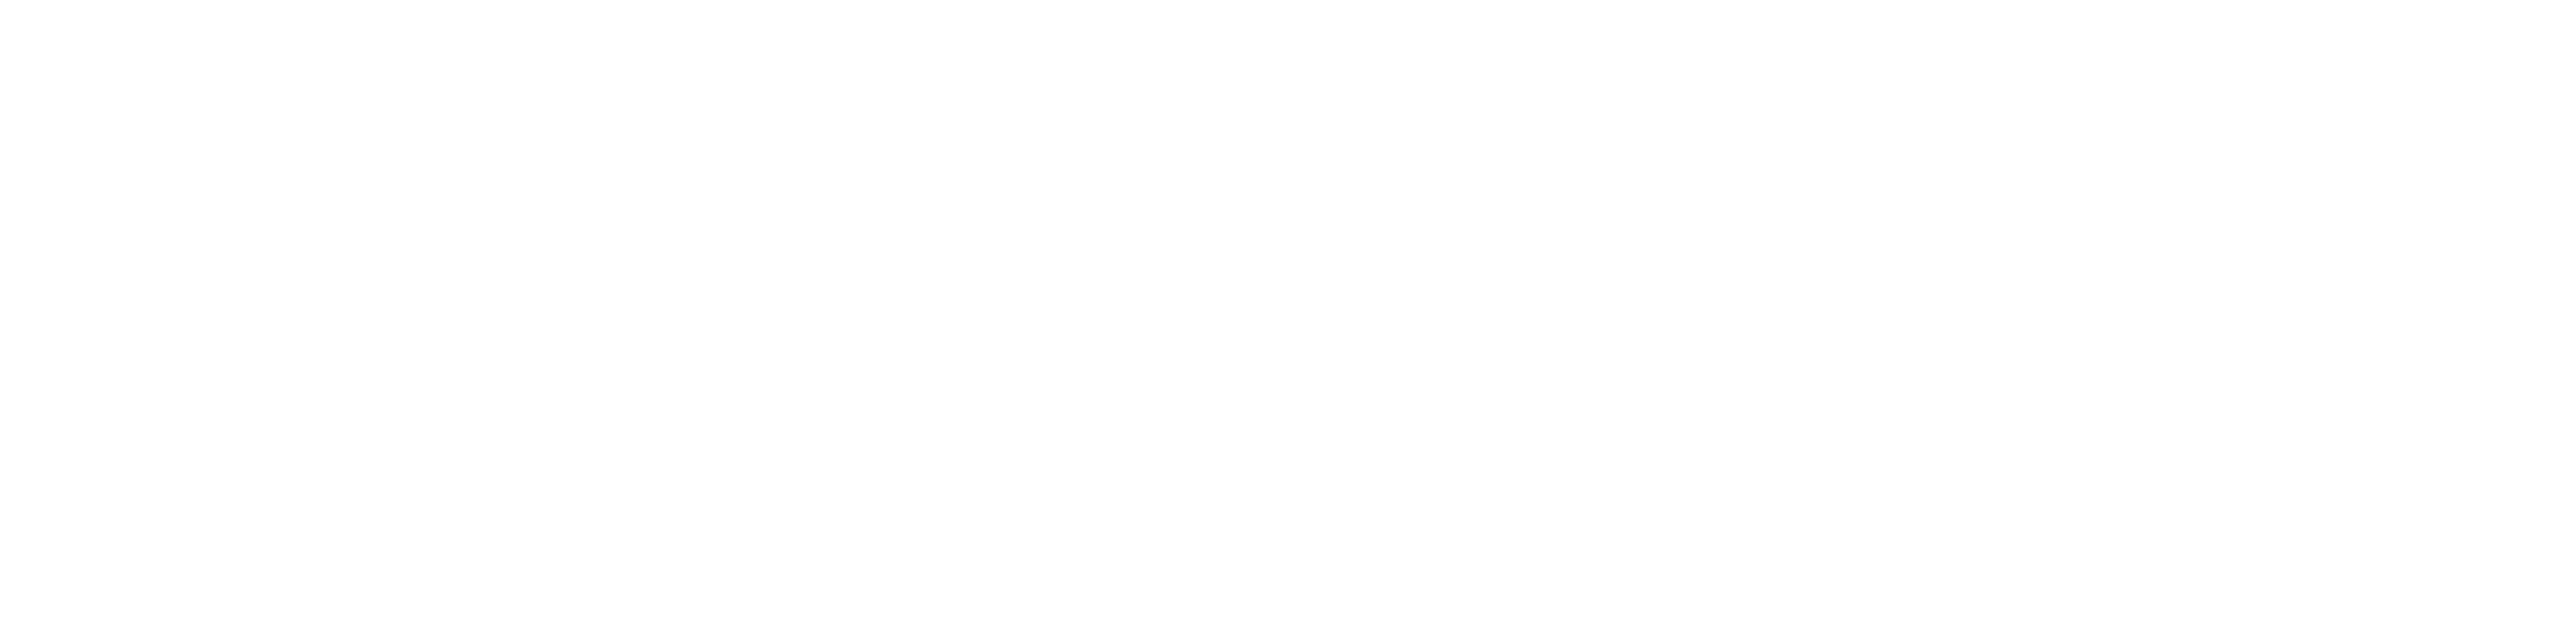 Blackfit Bodrum footer logo